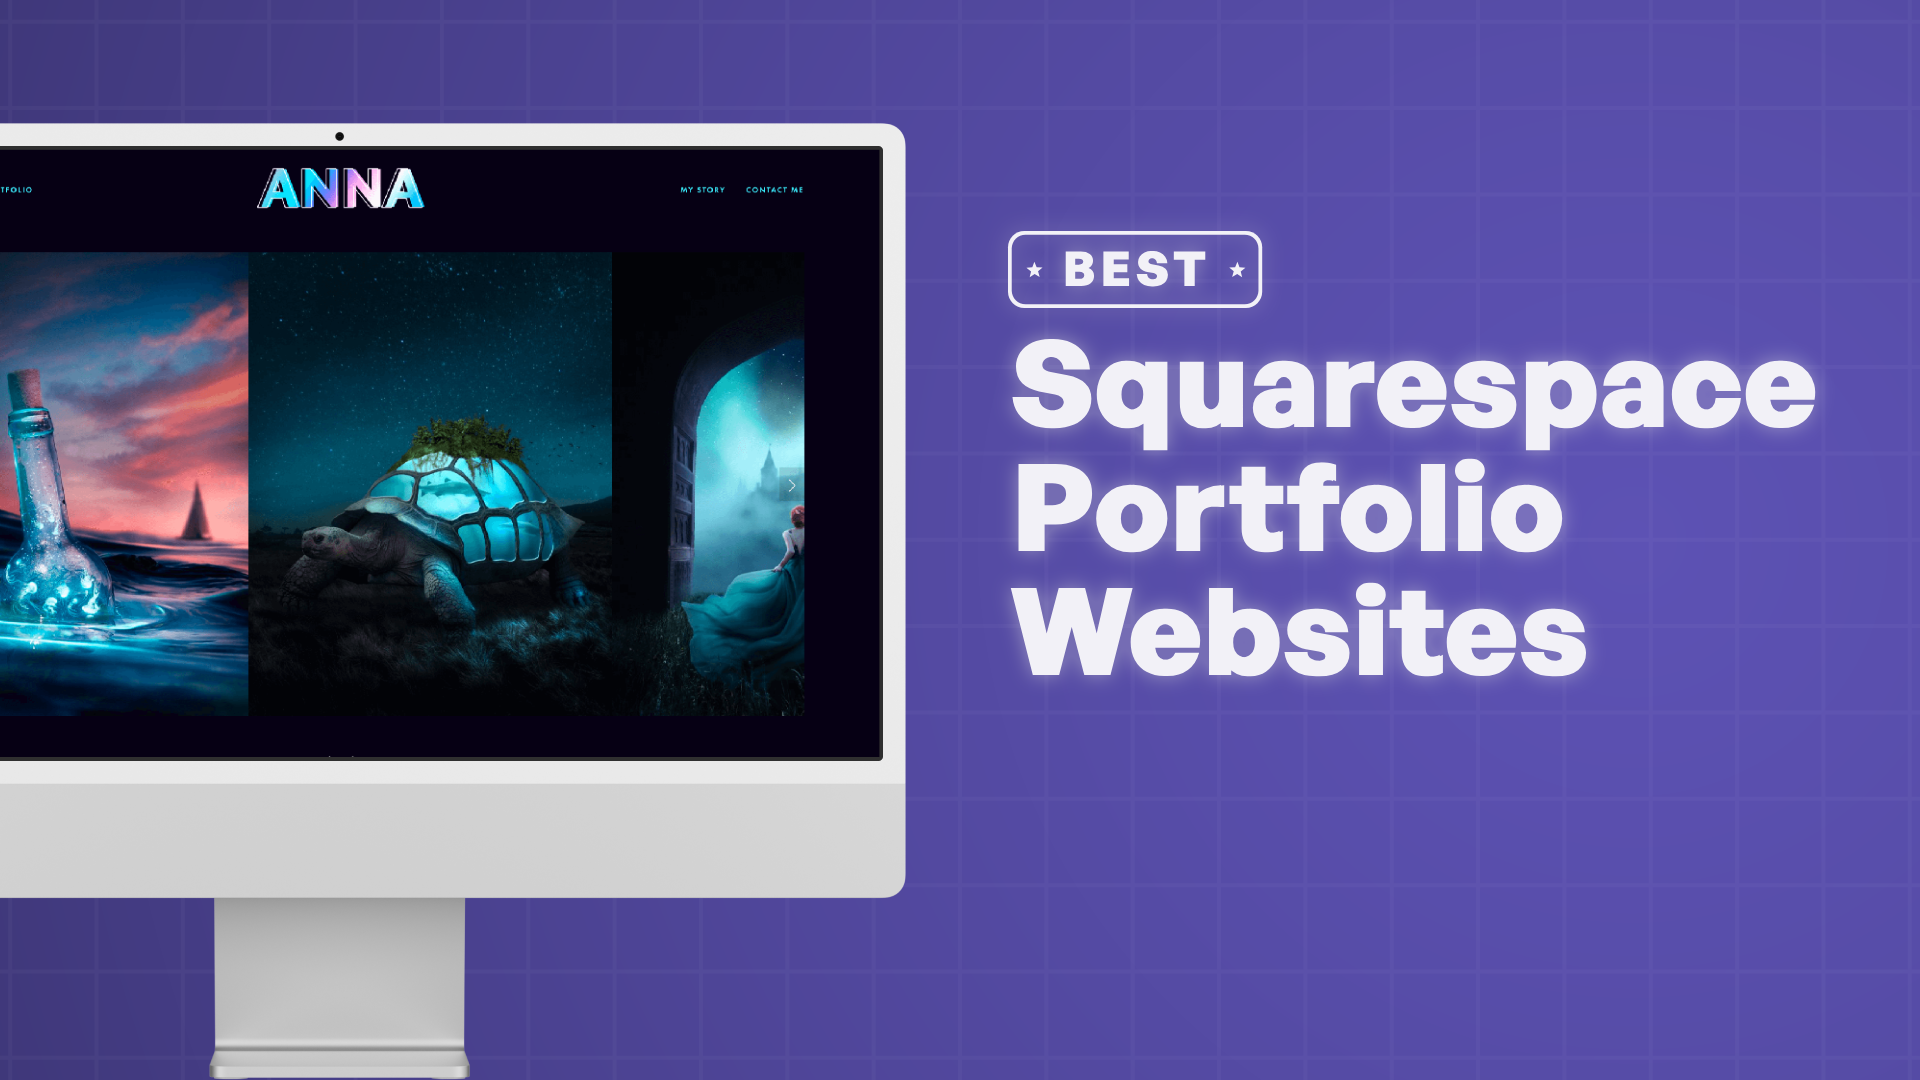 "Best Portfolio Websites on Squarespace" with screenshots of the portfolio websites on Squarespace